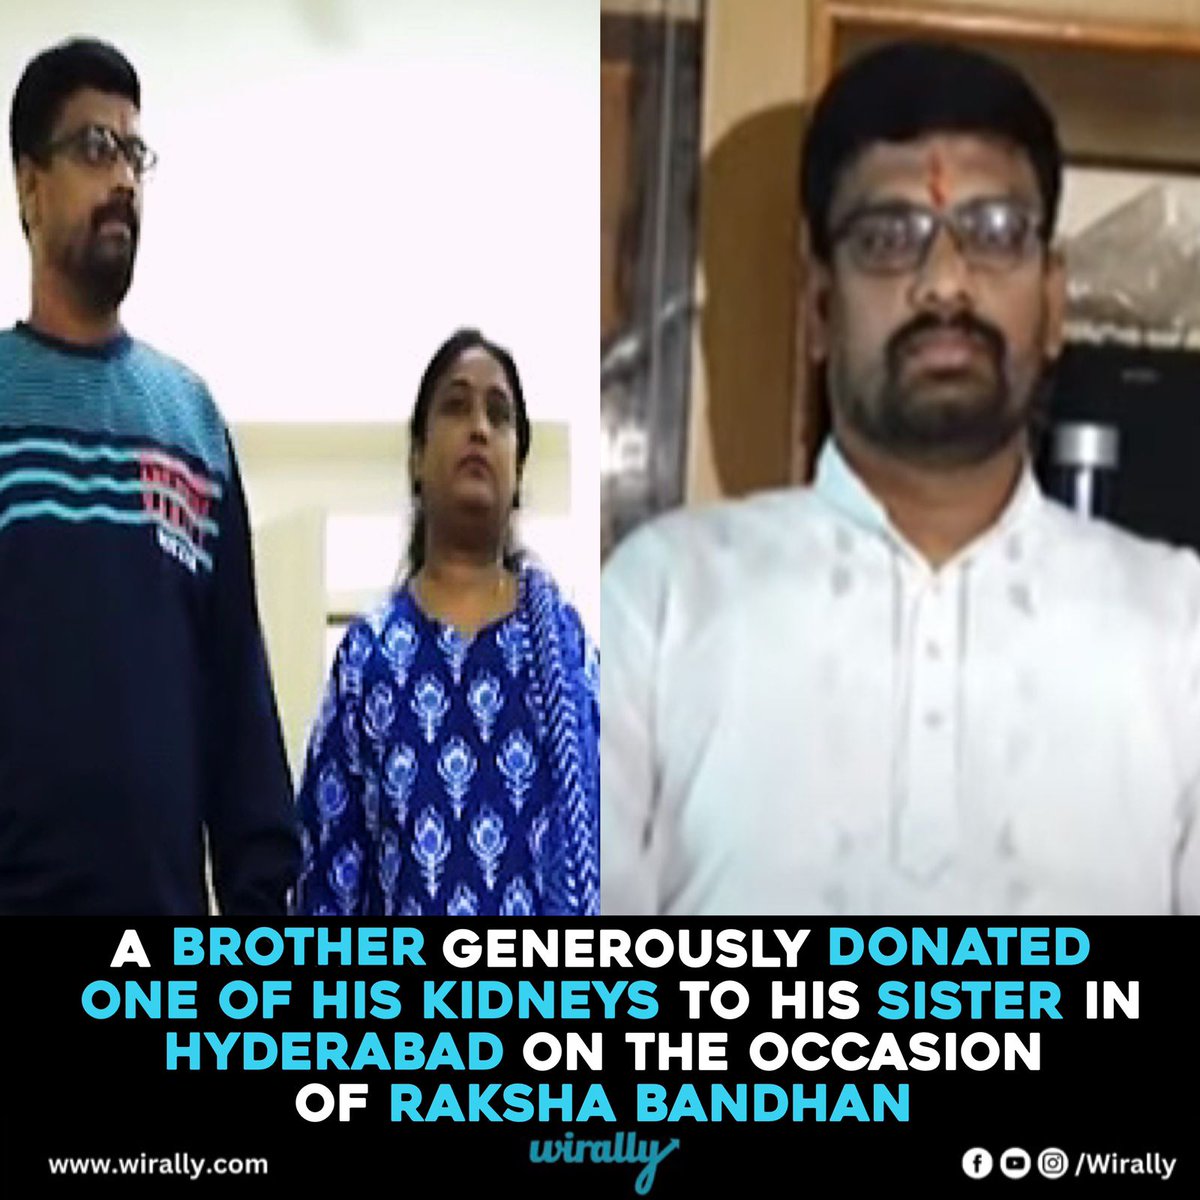 On the occasion of Raksha Bandhan, A Brother gifted His Kidney to her sister in Hyderabad

#RakshaBandhanGift #SiblingLove #KidneyDonation #HyderabadMiracle #FamilyBond #GiftOfLife